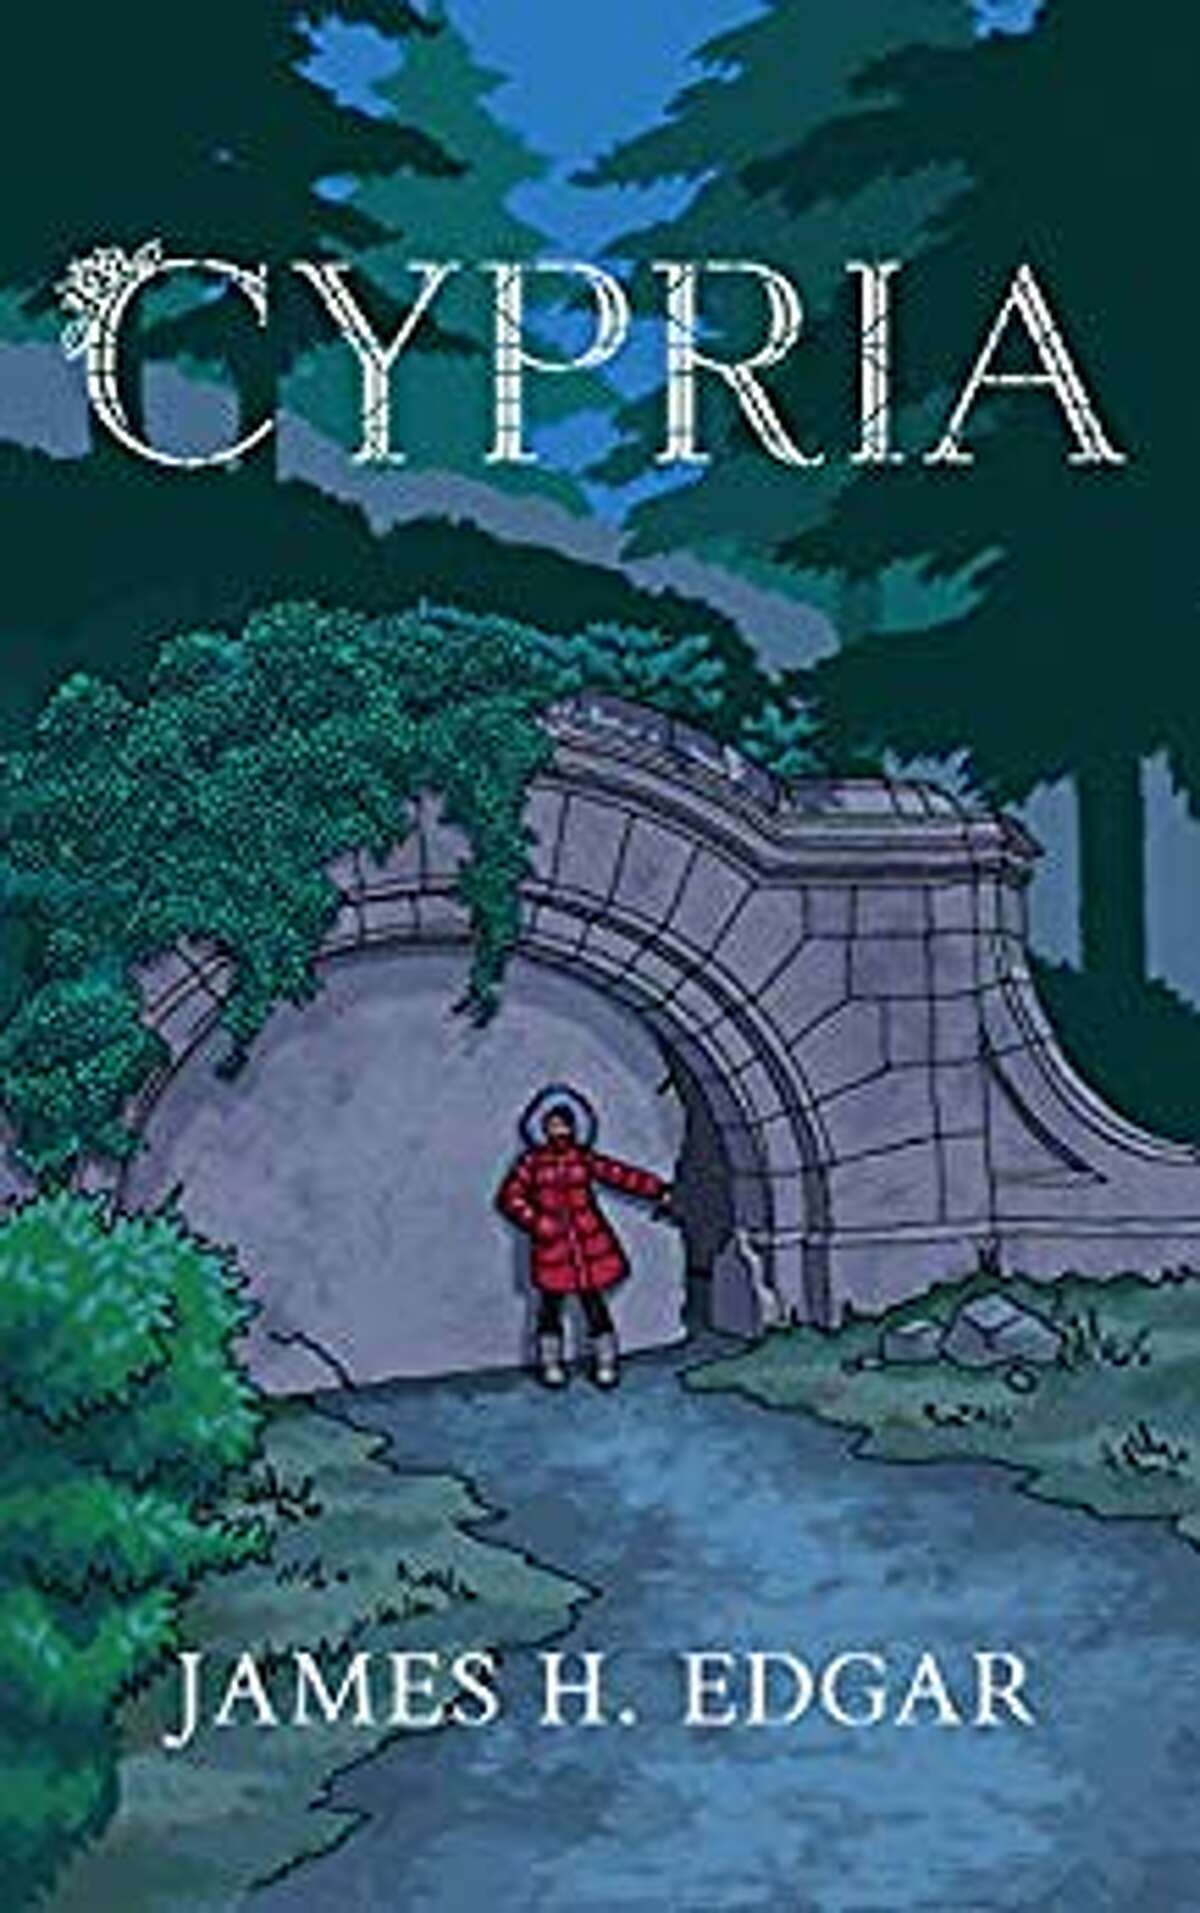 "Cypria" by James Edgar. (Amazon.com)